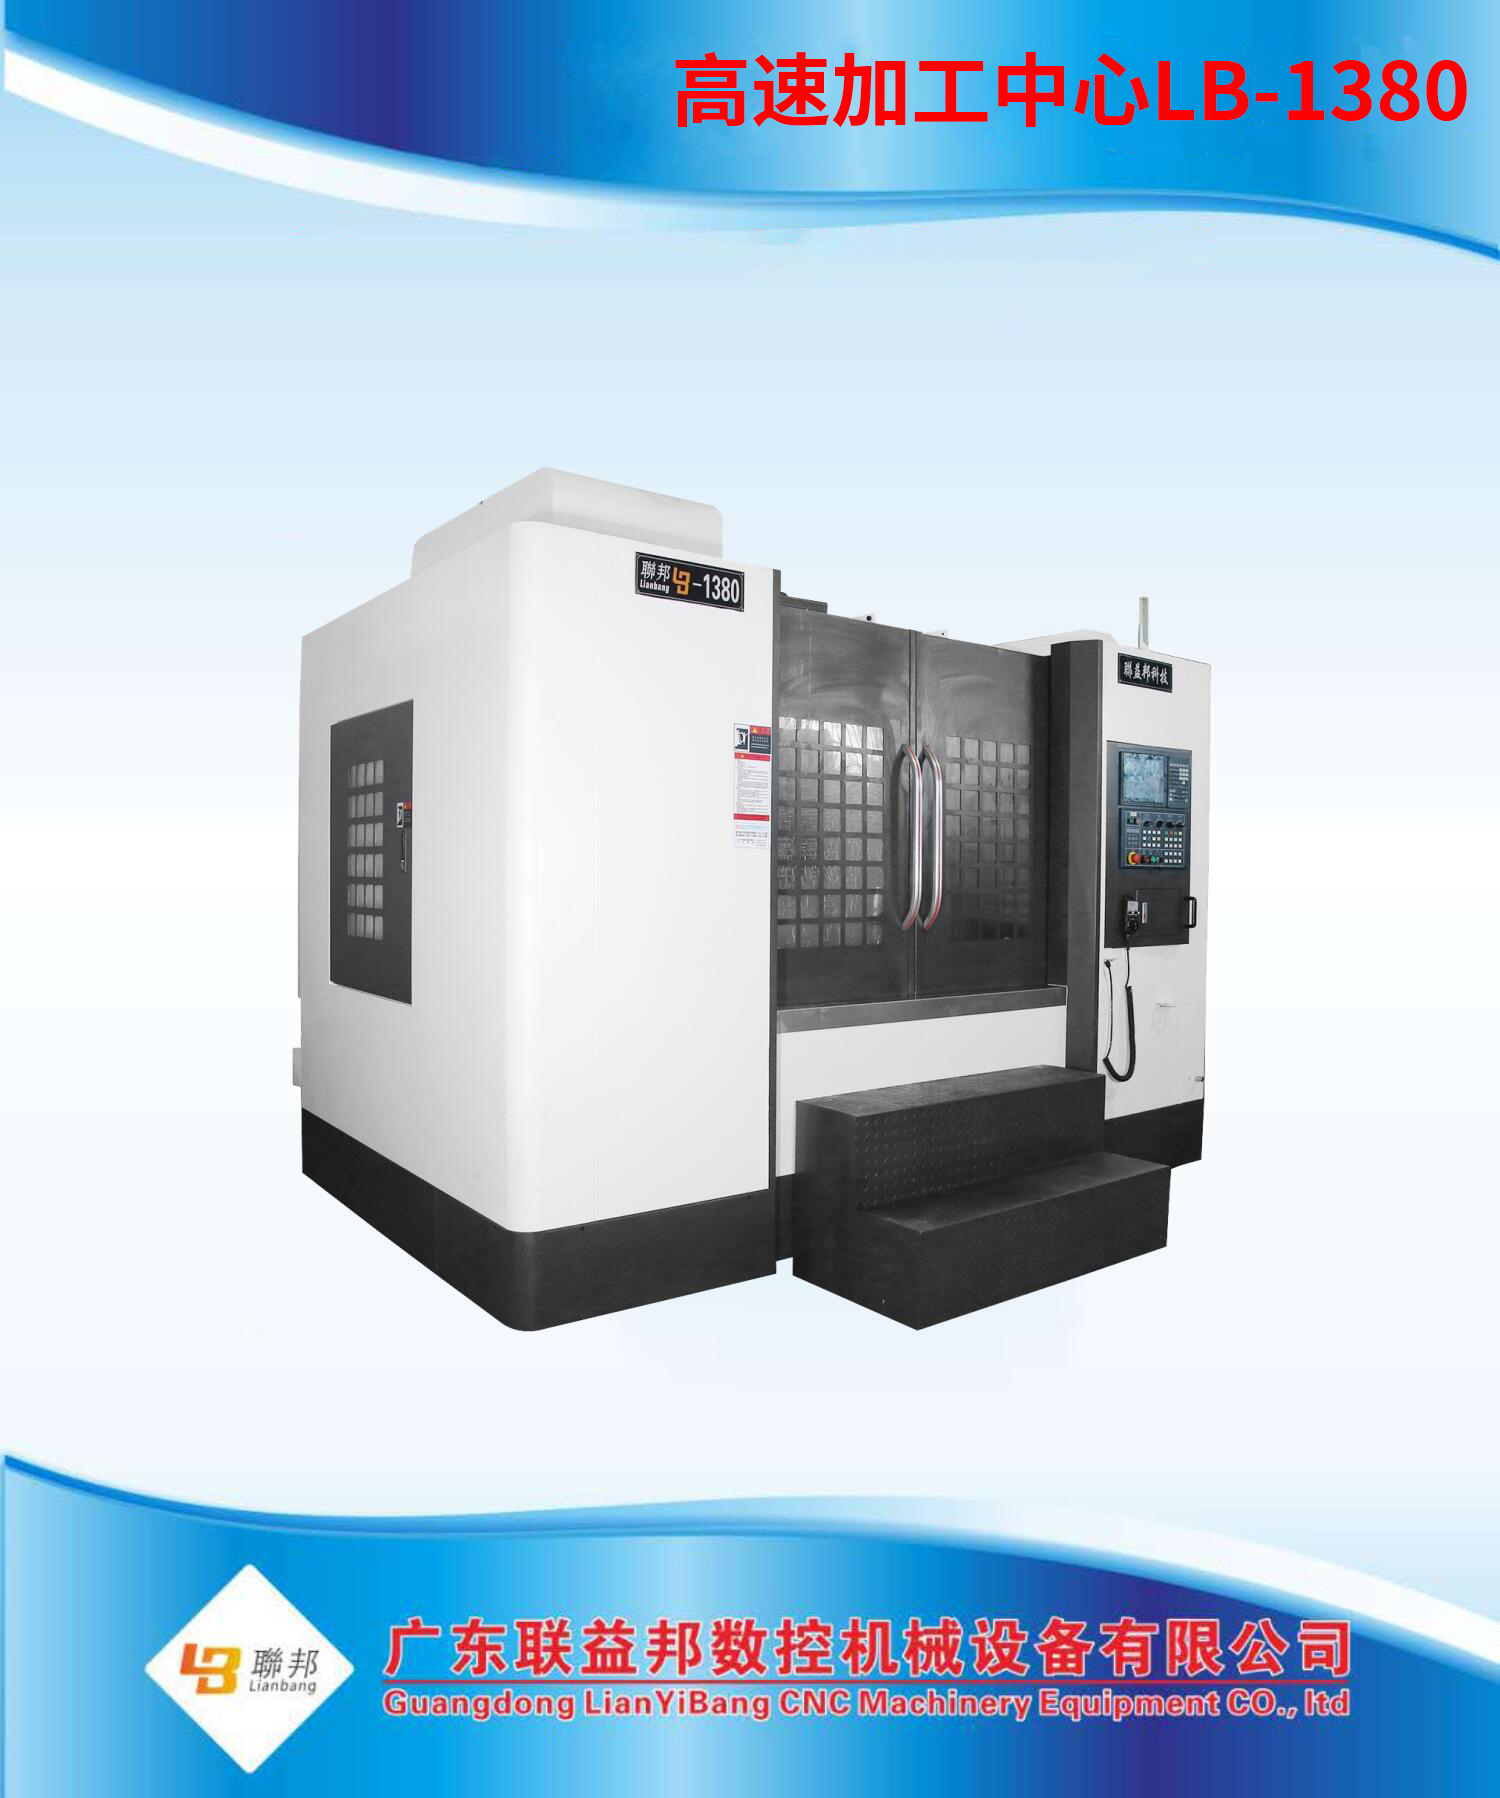  High speed machining center lb-1380